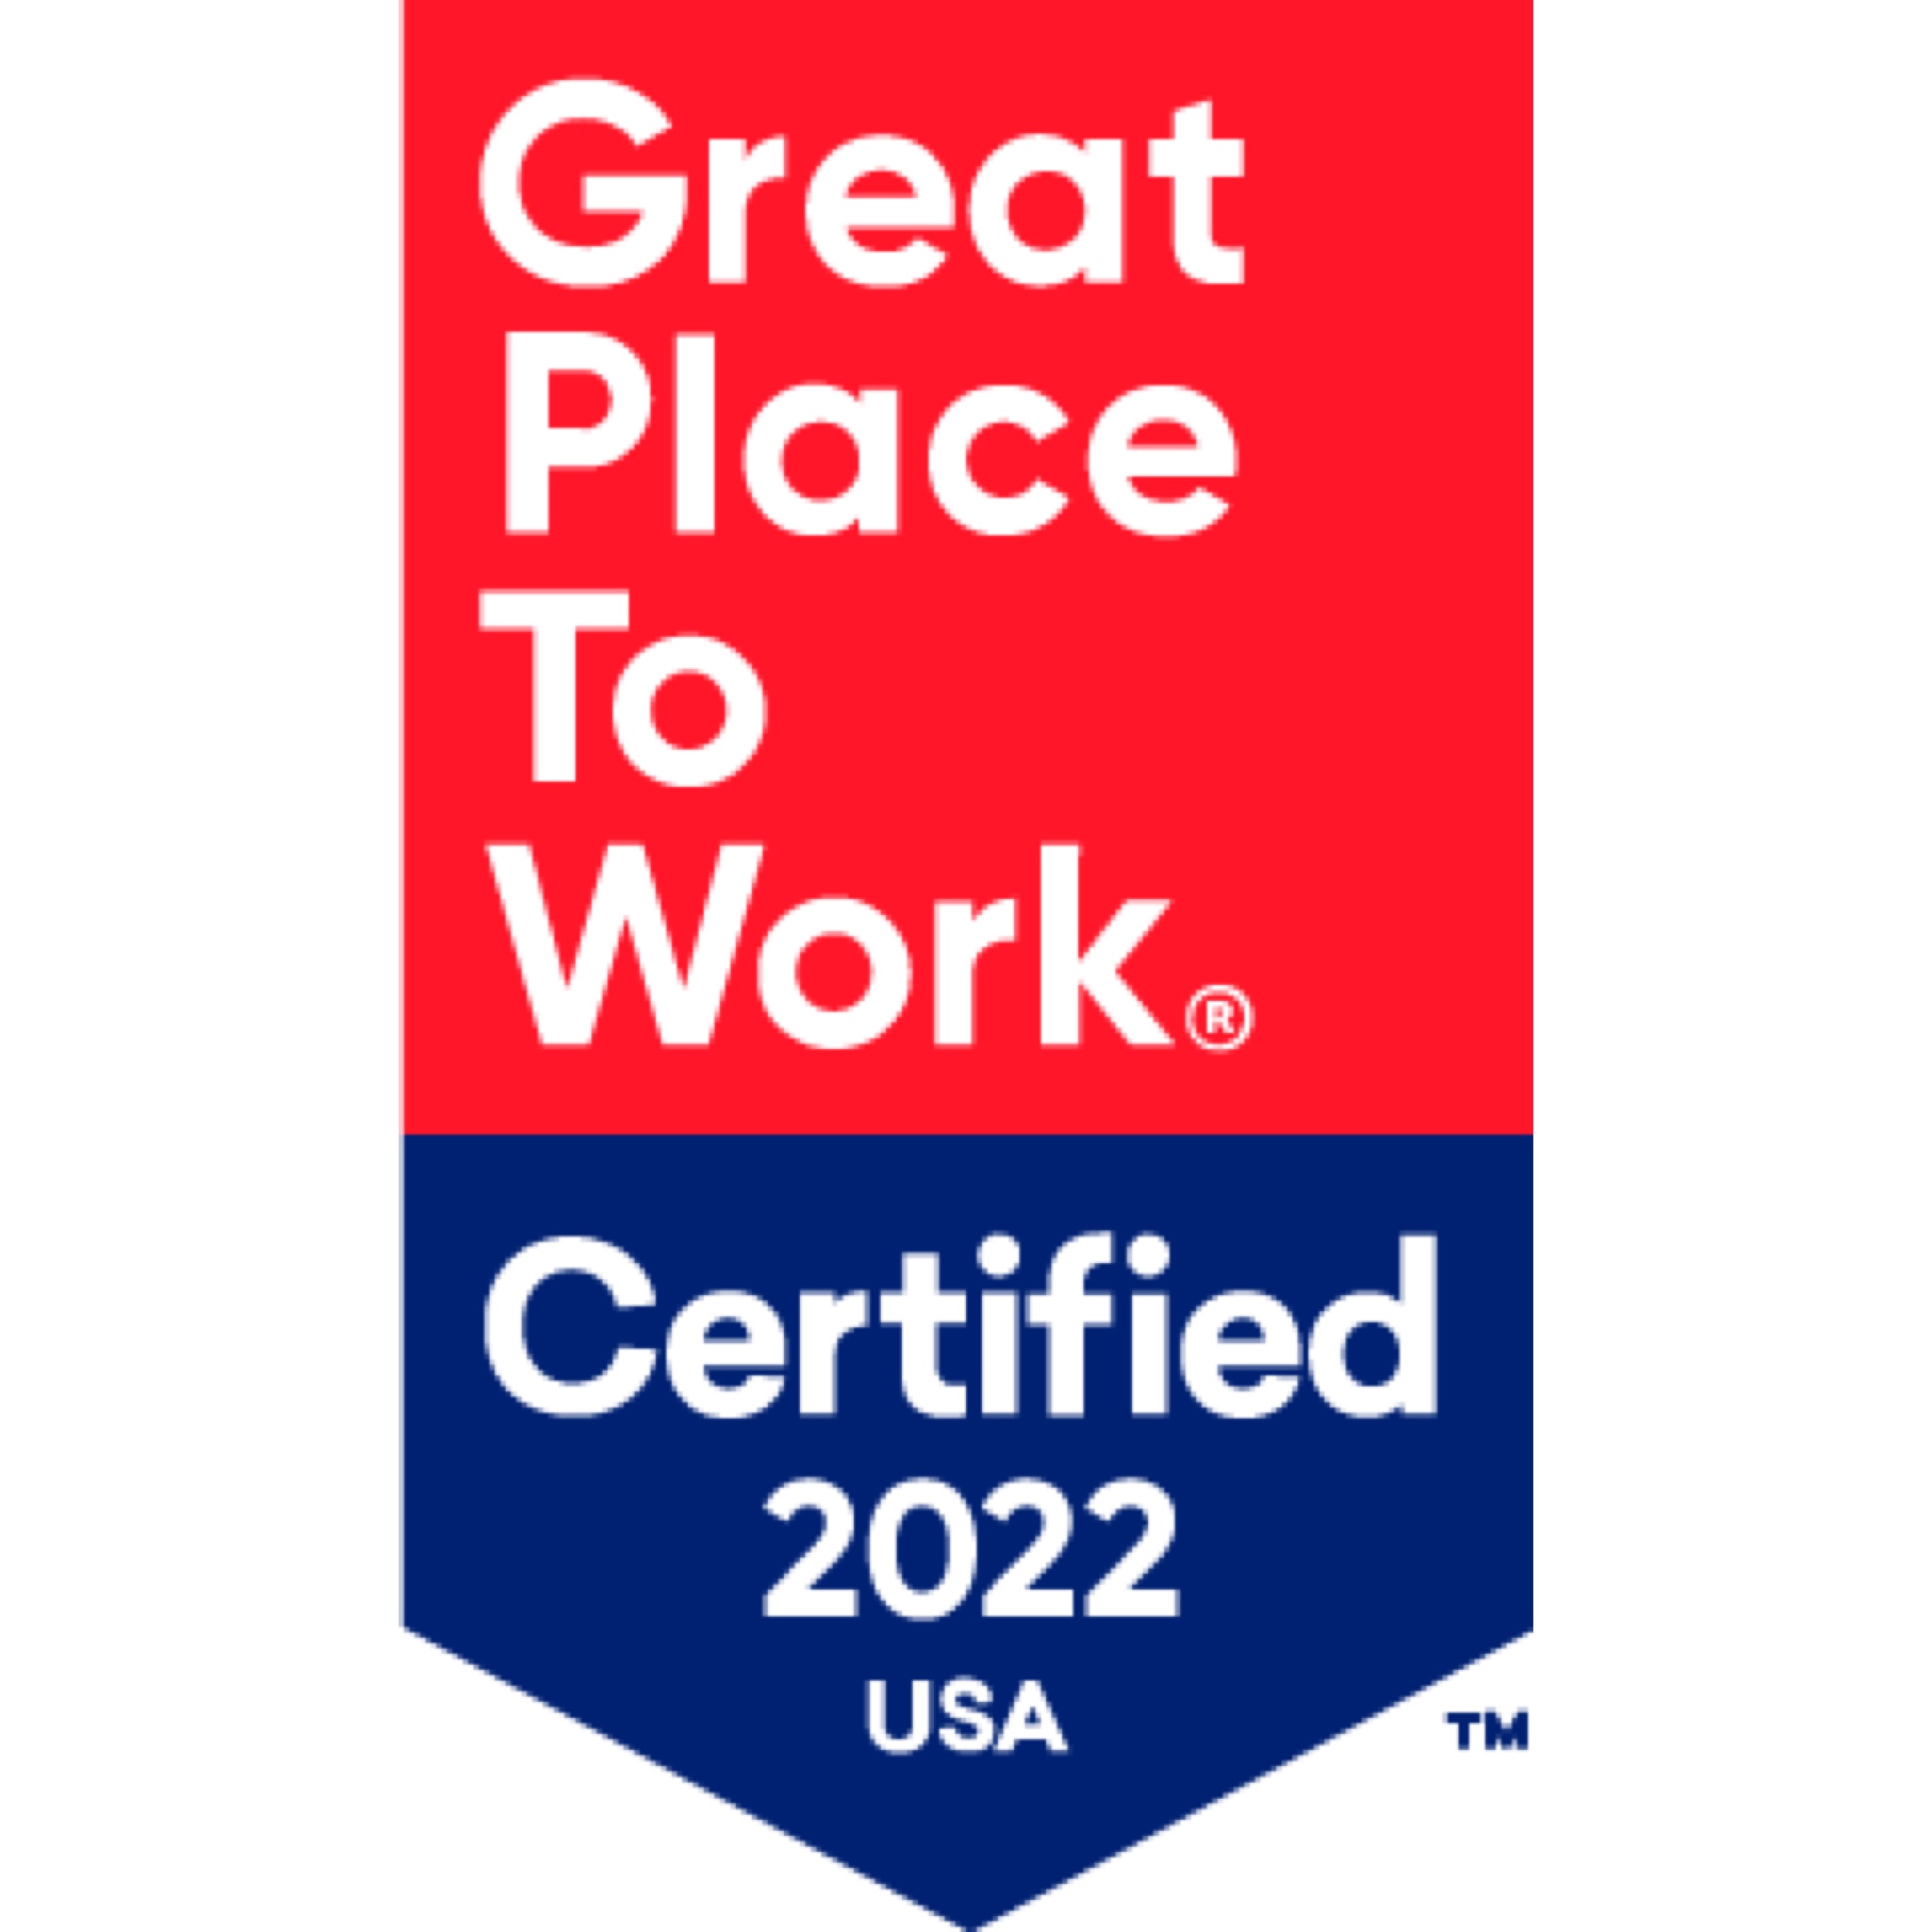 United States Altered State Productions, Great Places to Work - Certified 2022 USA ödülünü kazandı